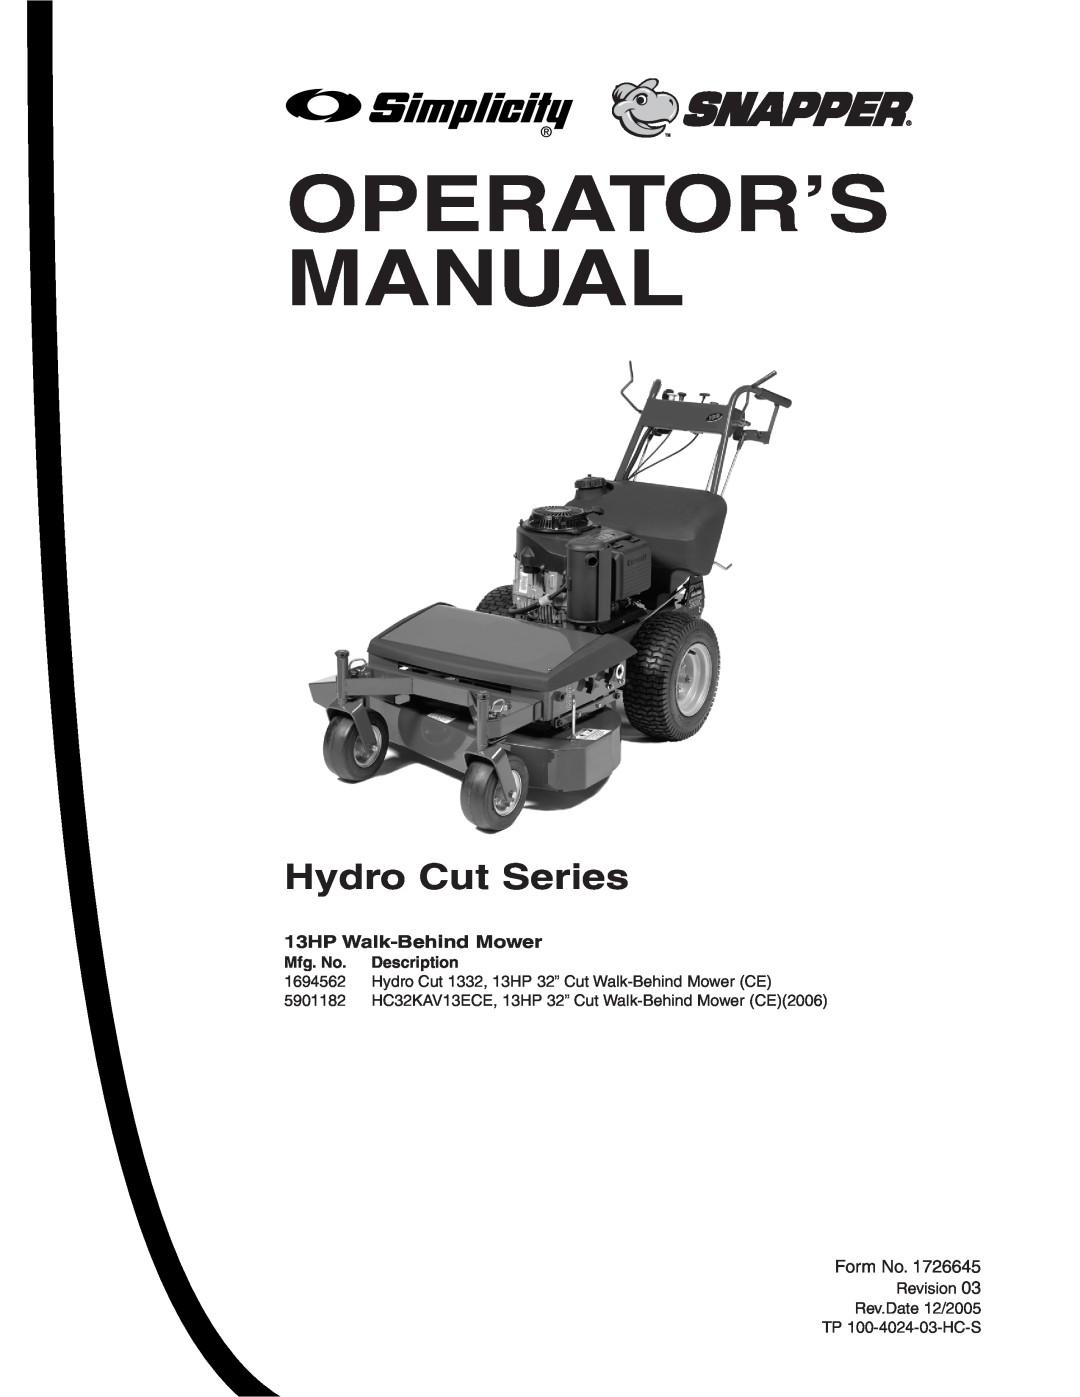 Snapper 13HP manual Operator’S Manual, Hydro Cut Series, Mfg. No. Description 